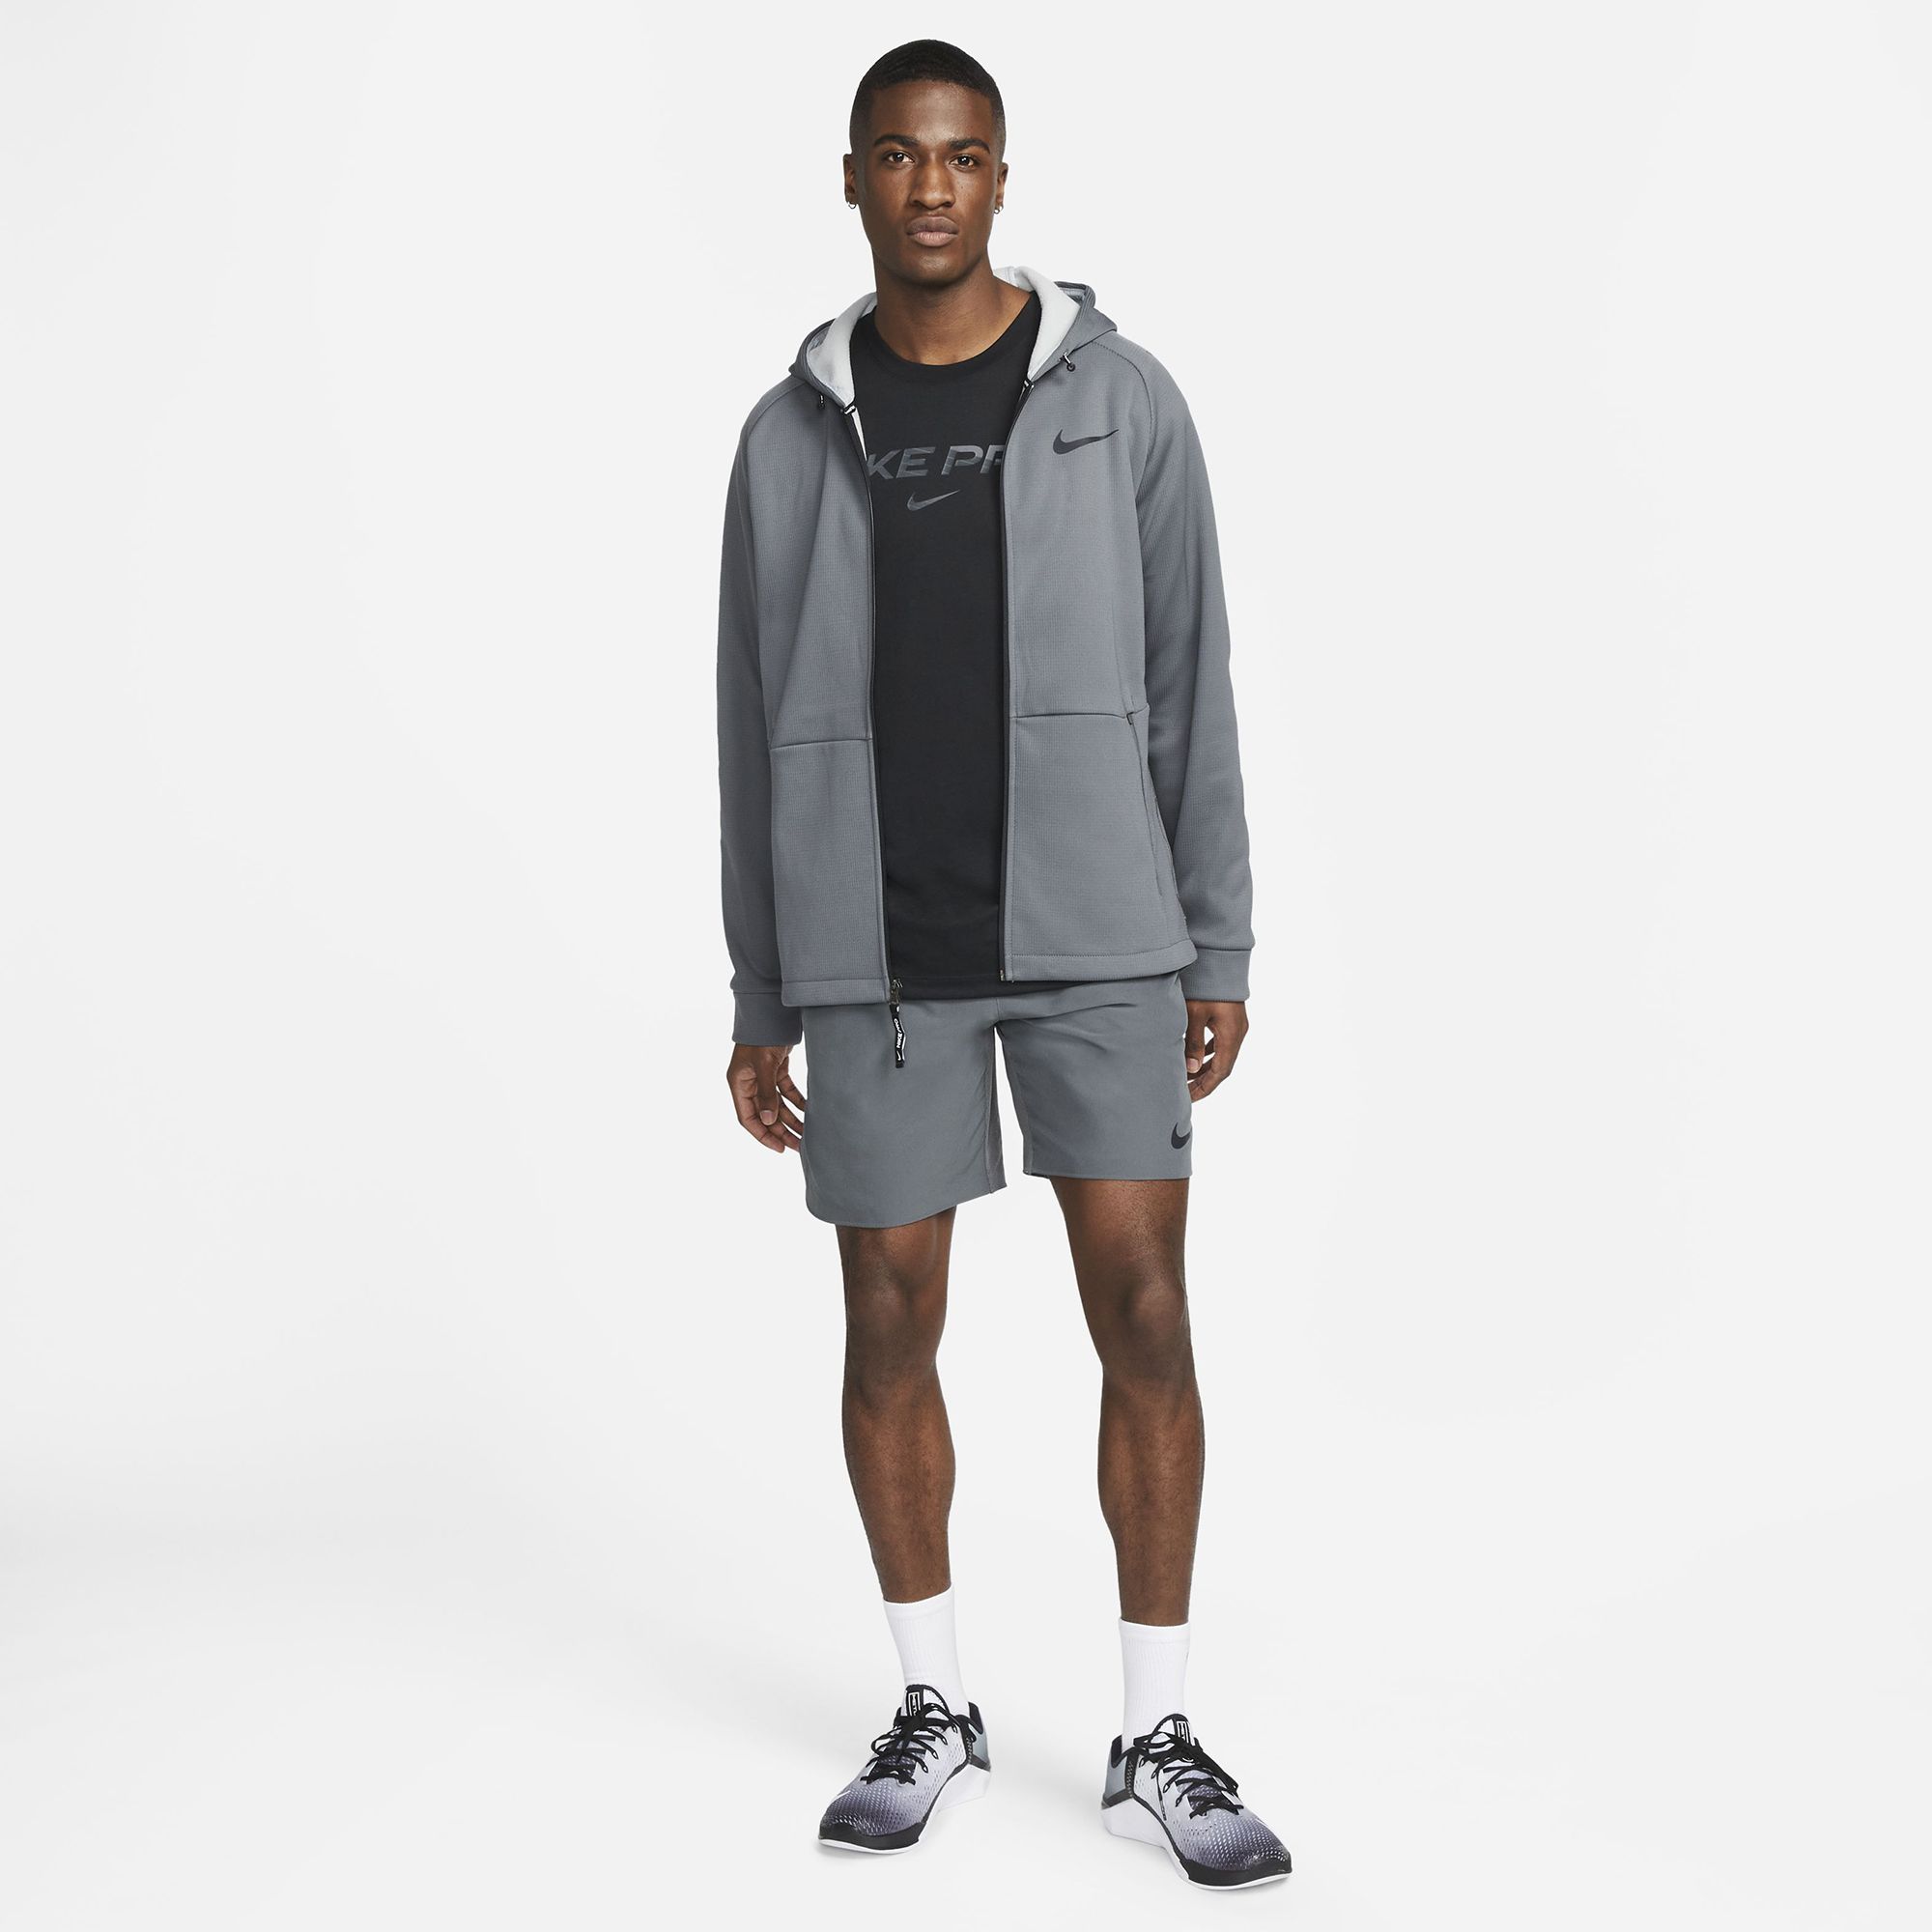 Nike Men's Pro Therma-FIT Full-Zip Hooded Jacket